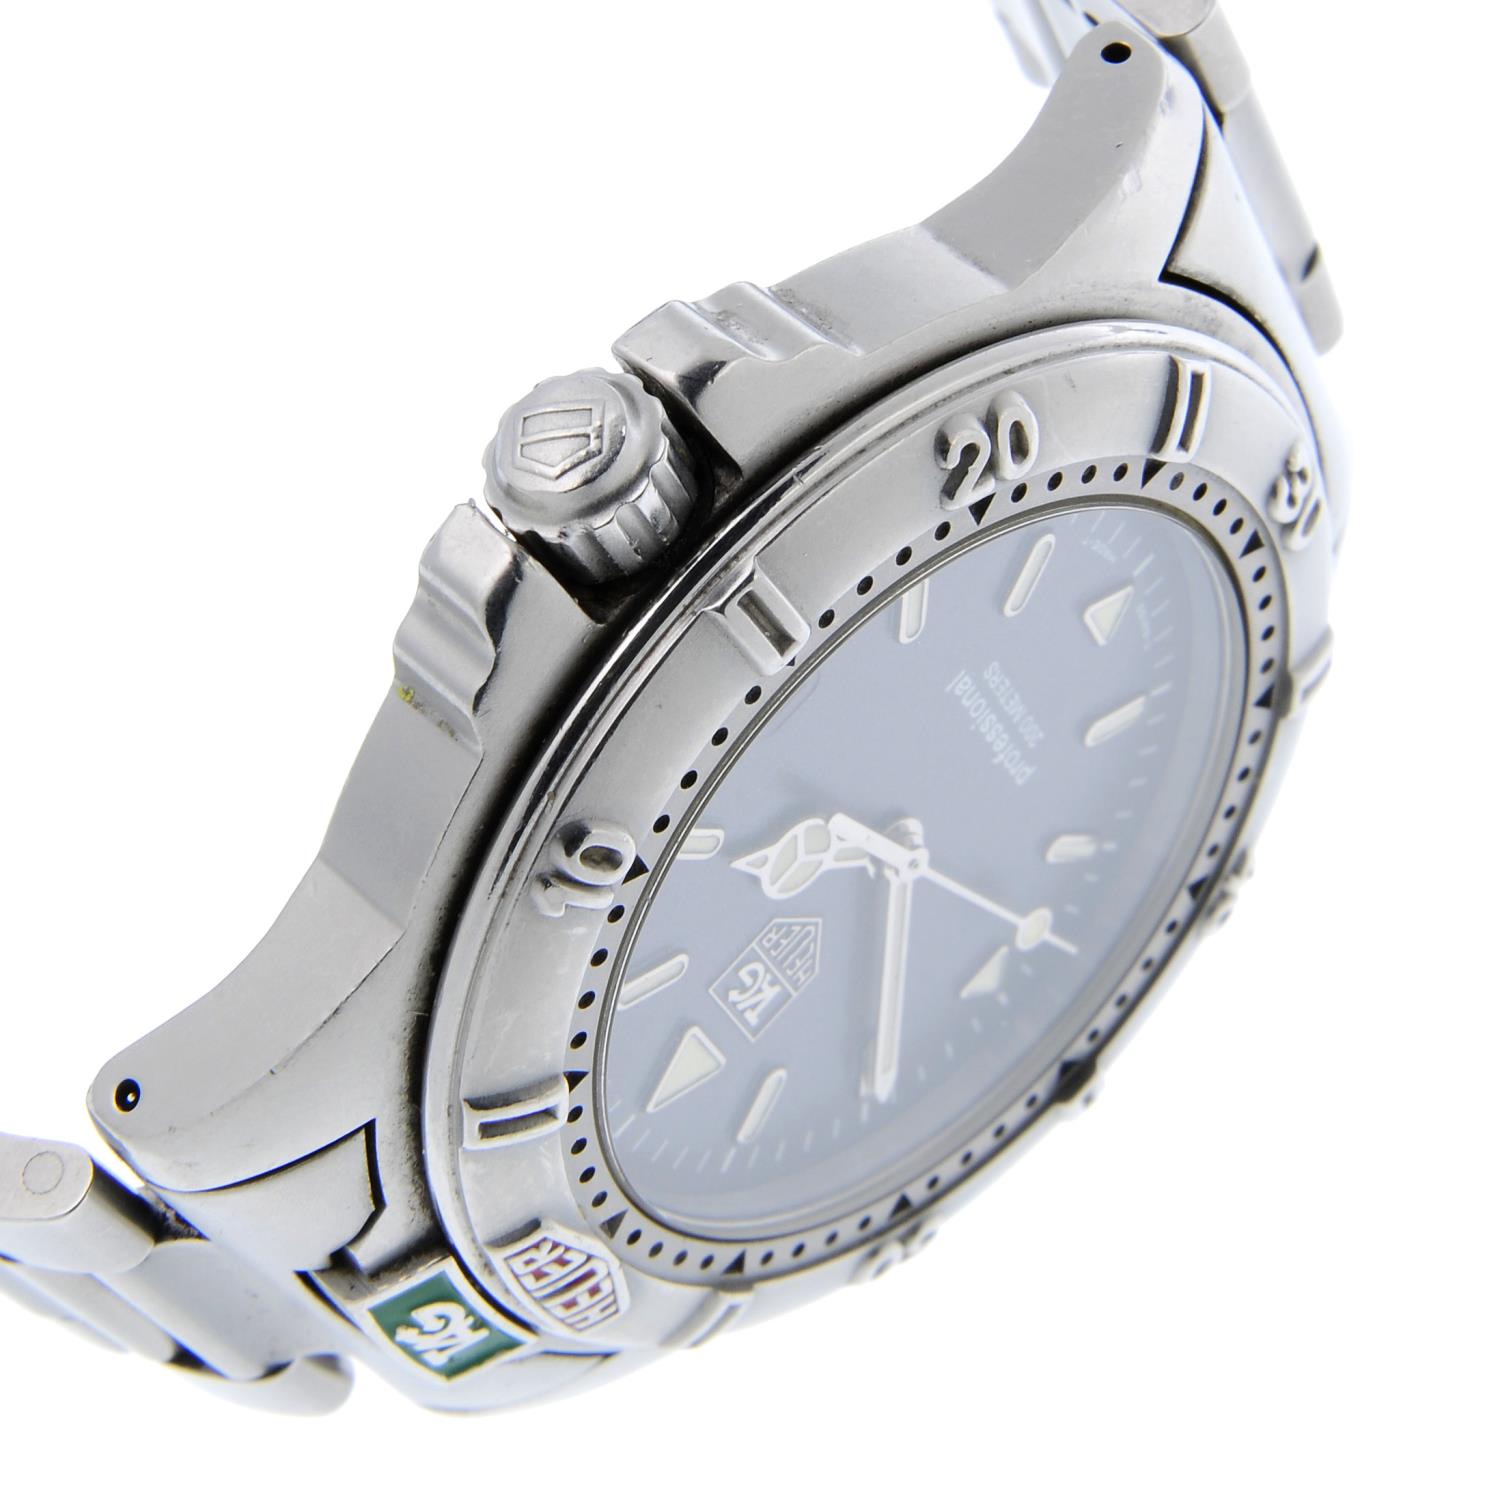 TAG HEUER - a gentleman's 4000 Series bracelet watch. - Image 3 of 4